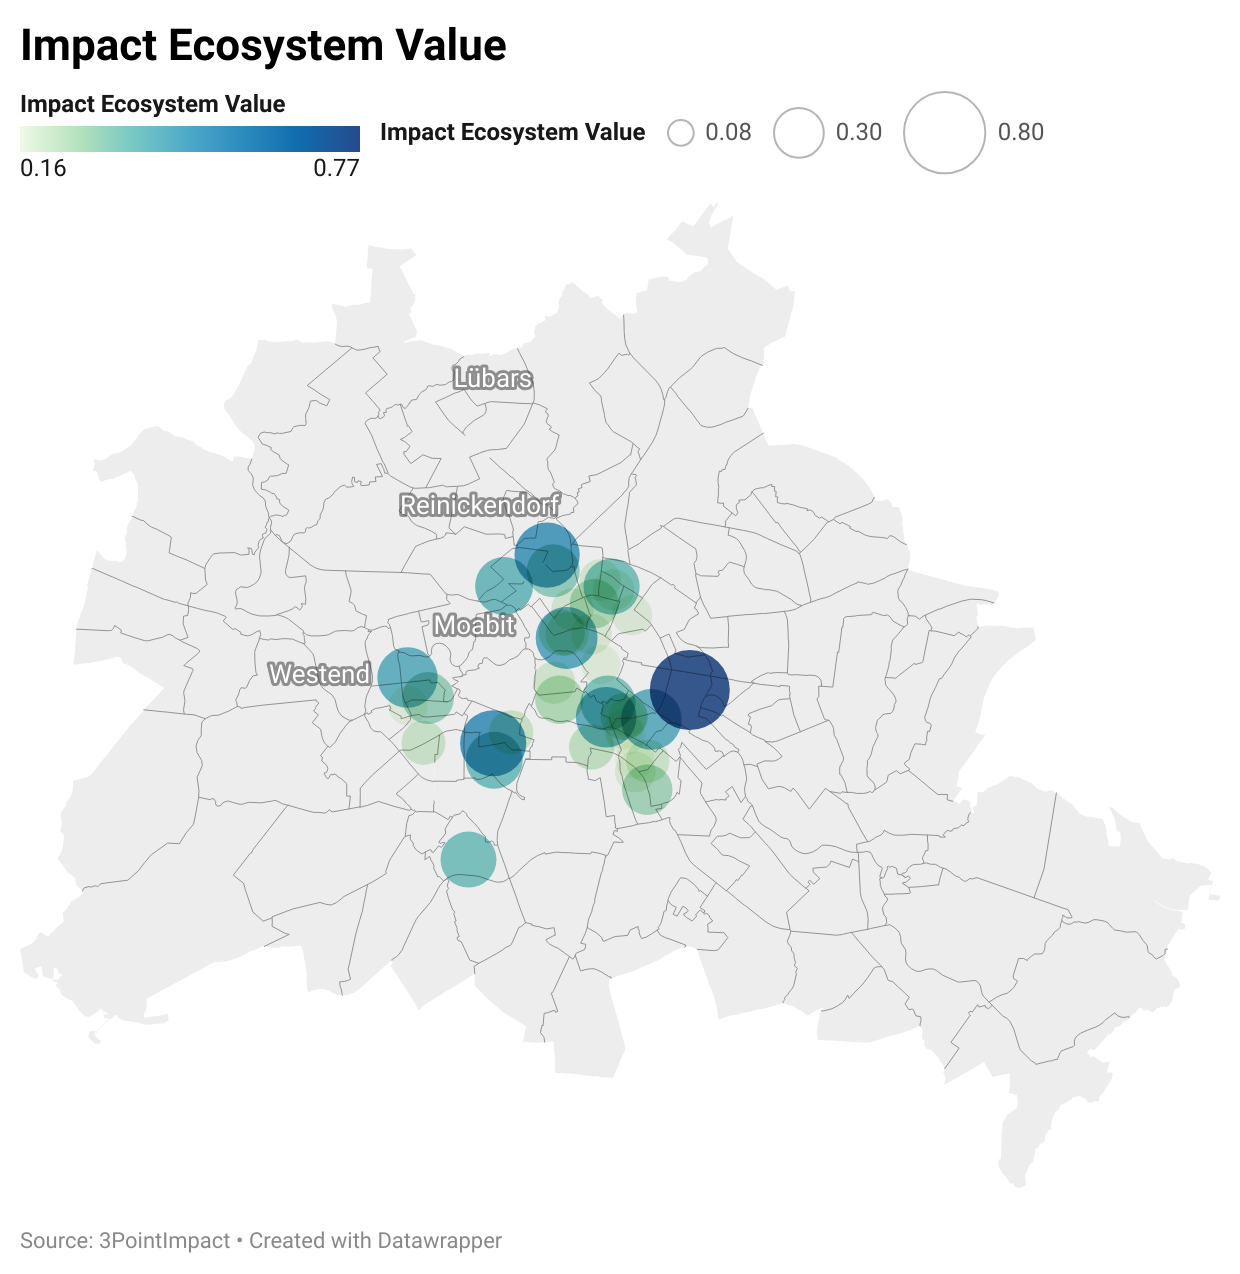 Ajtl9 impact ecosystem value nbsp 